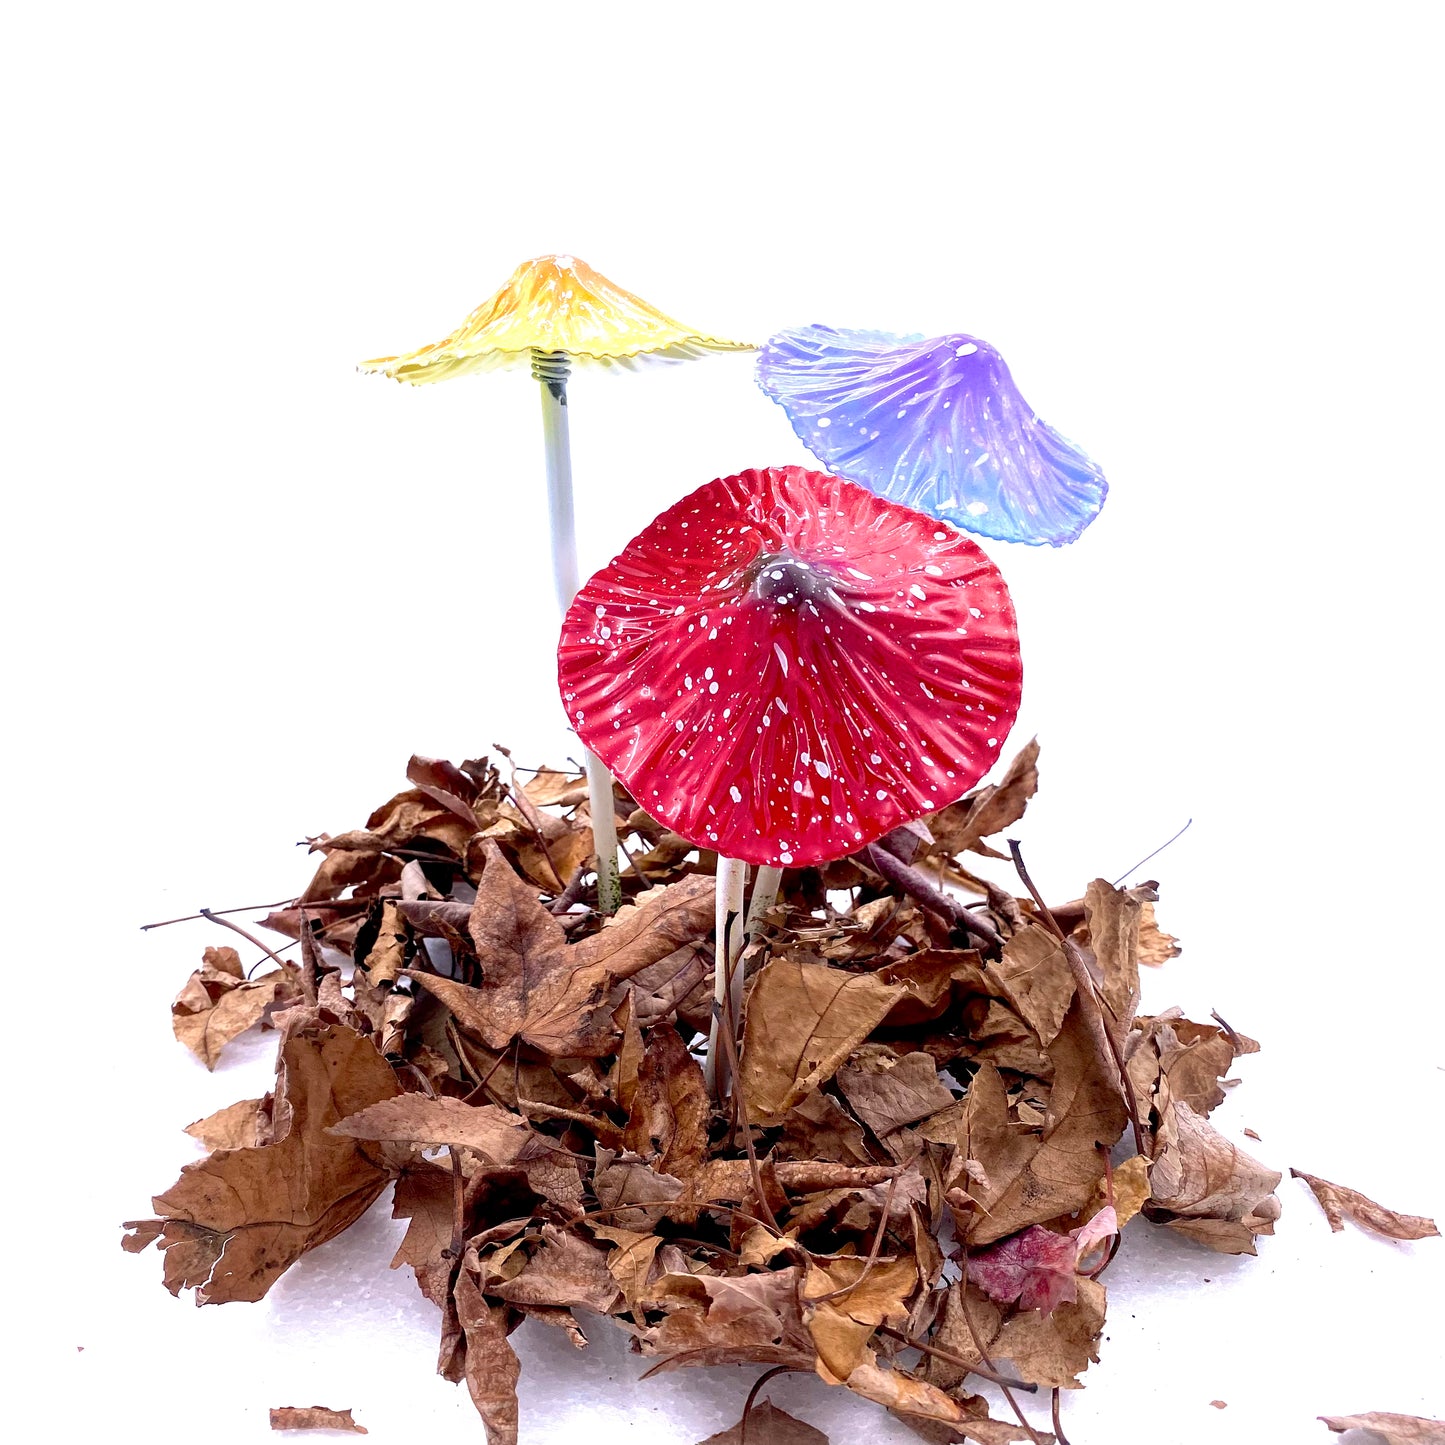 Umbrella Metal Mushroom (Small)